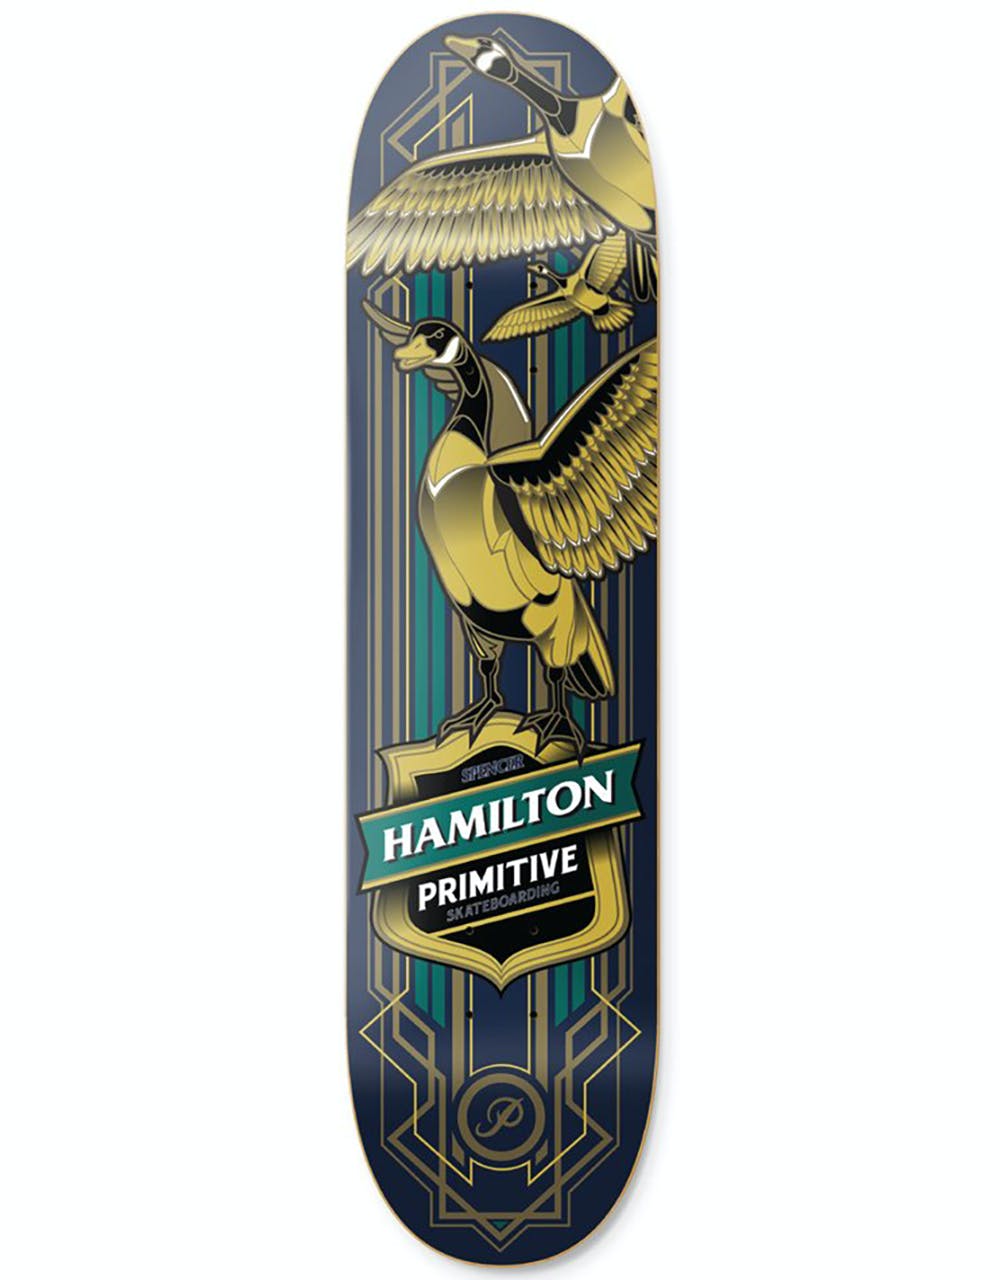 Primitive Hamilton Goose Skateboard Deck - 8.125"